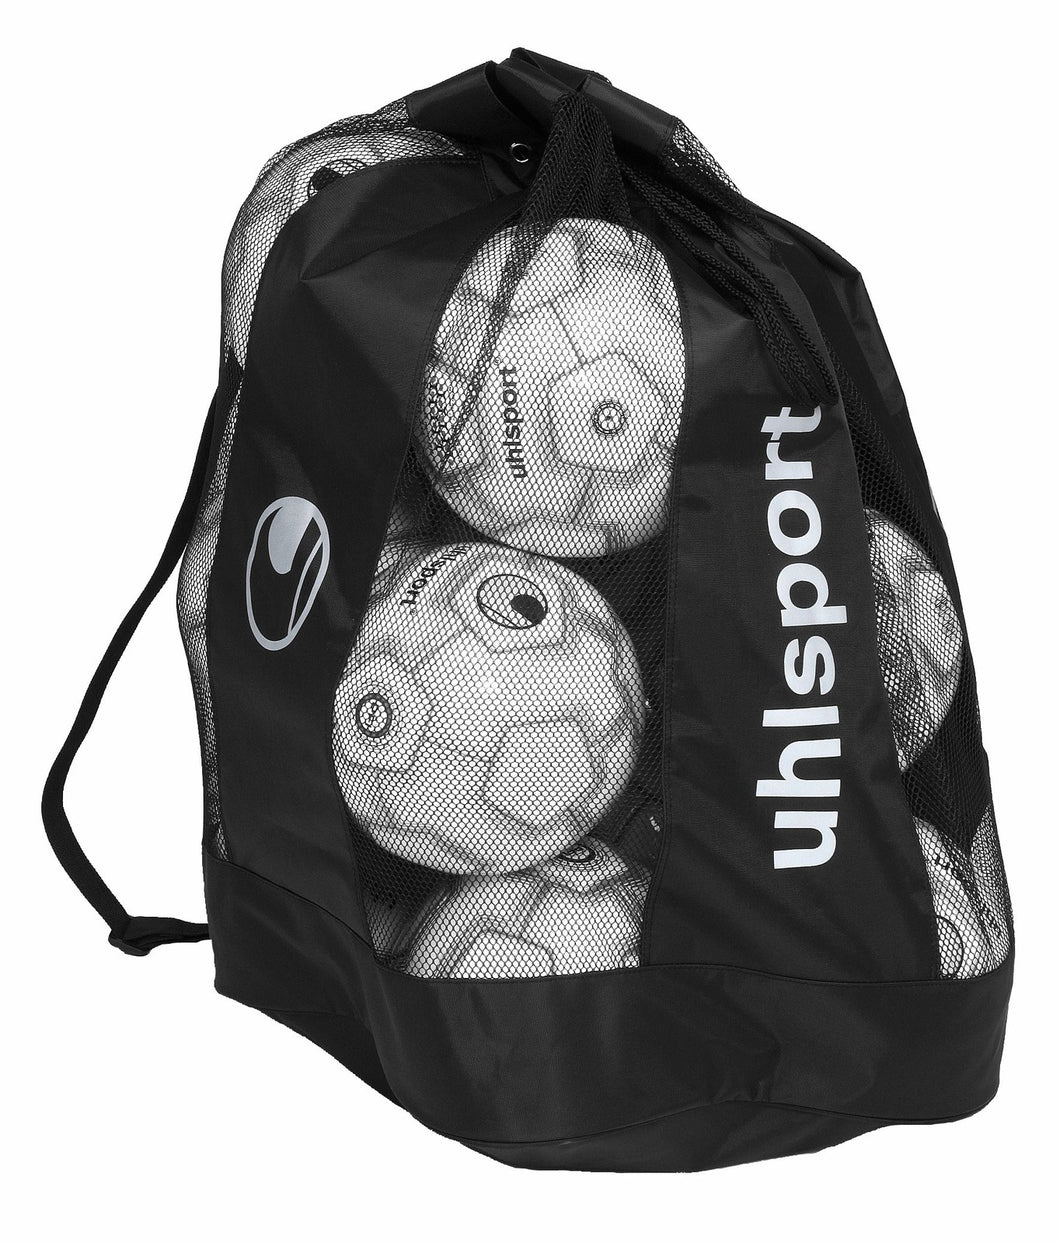 Uhlsport Ball Bag